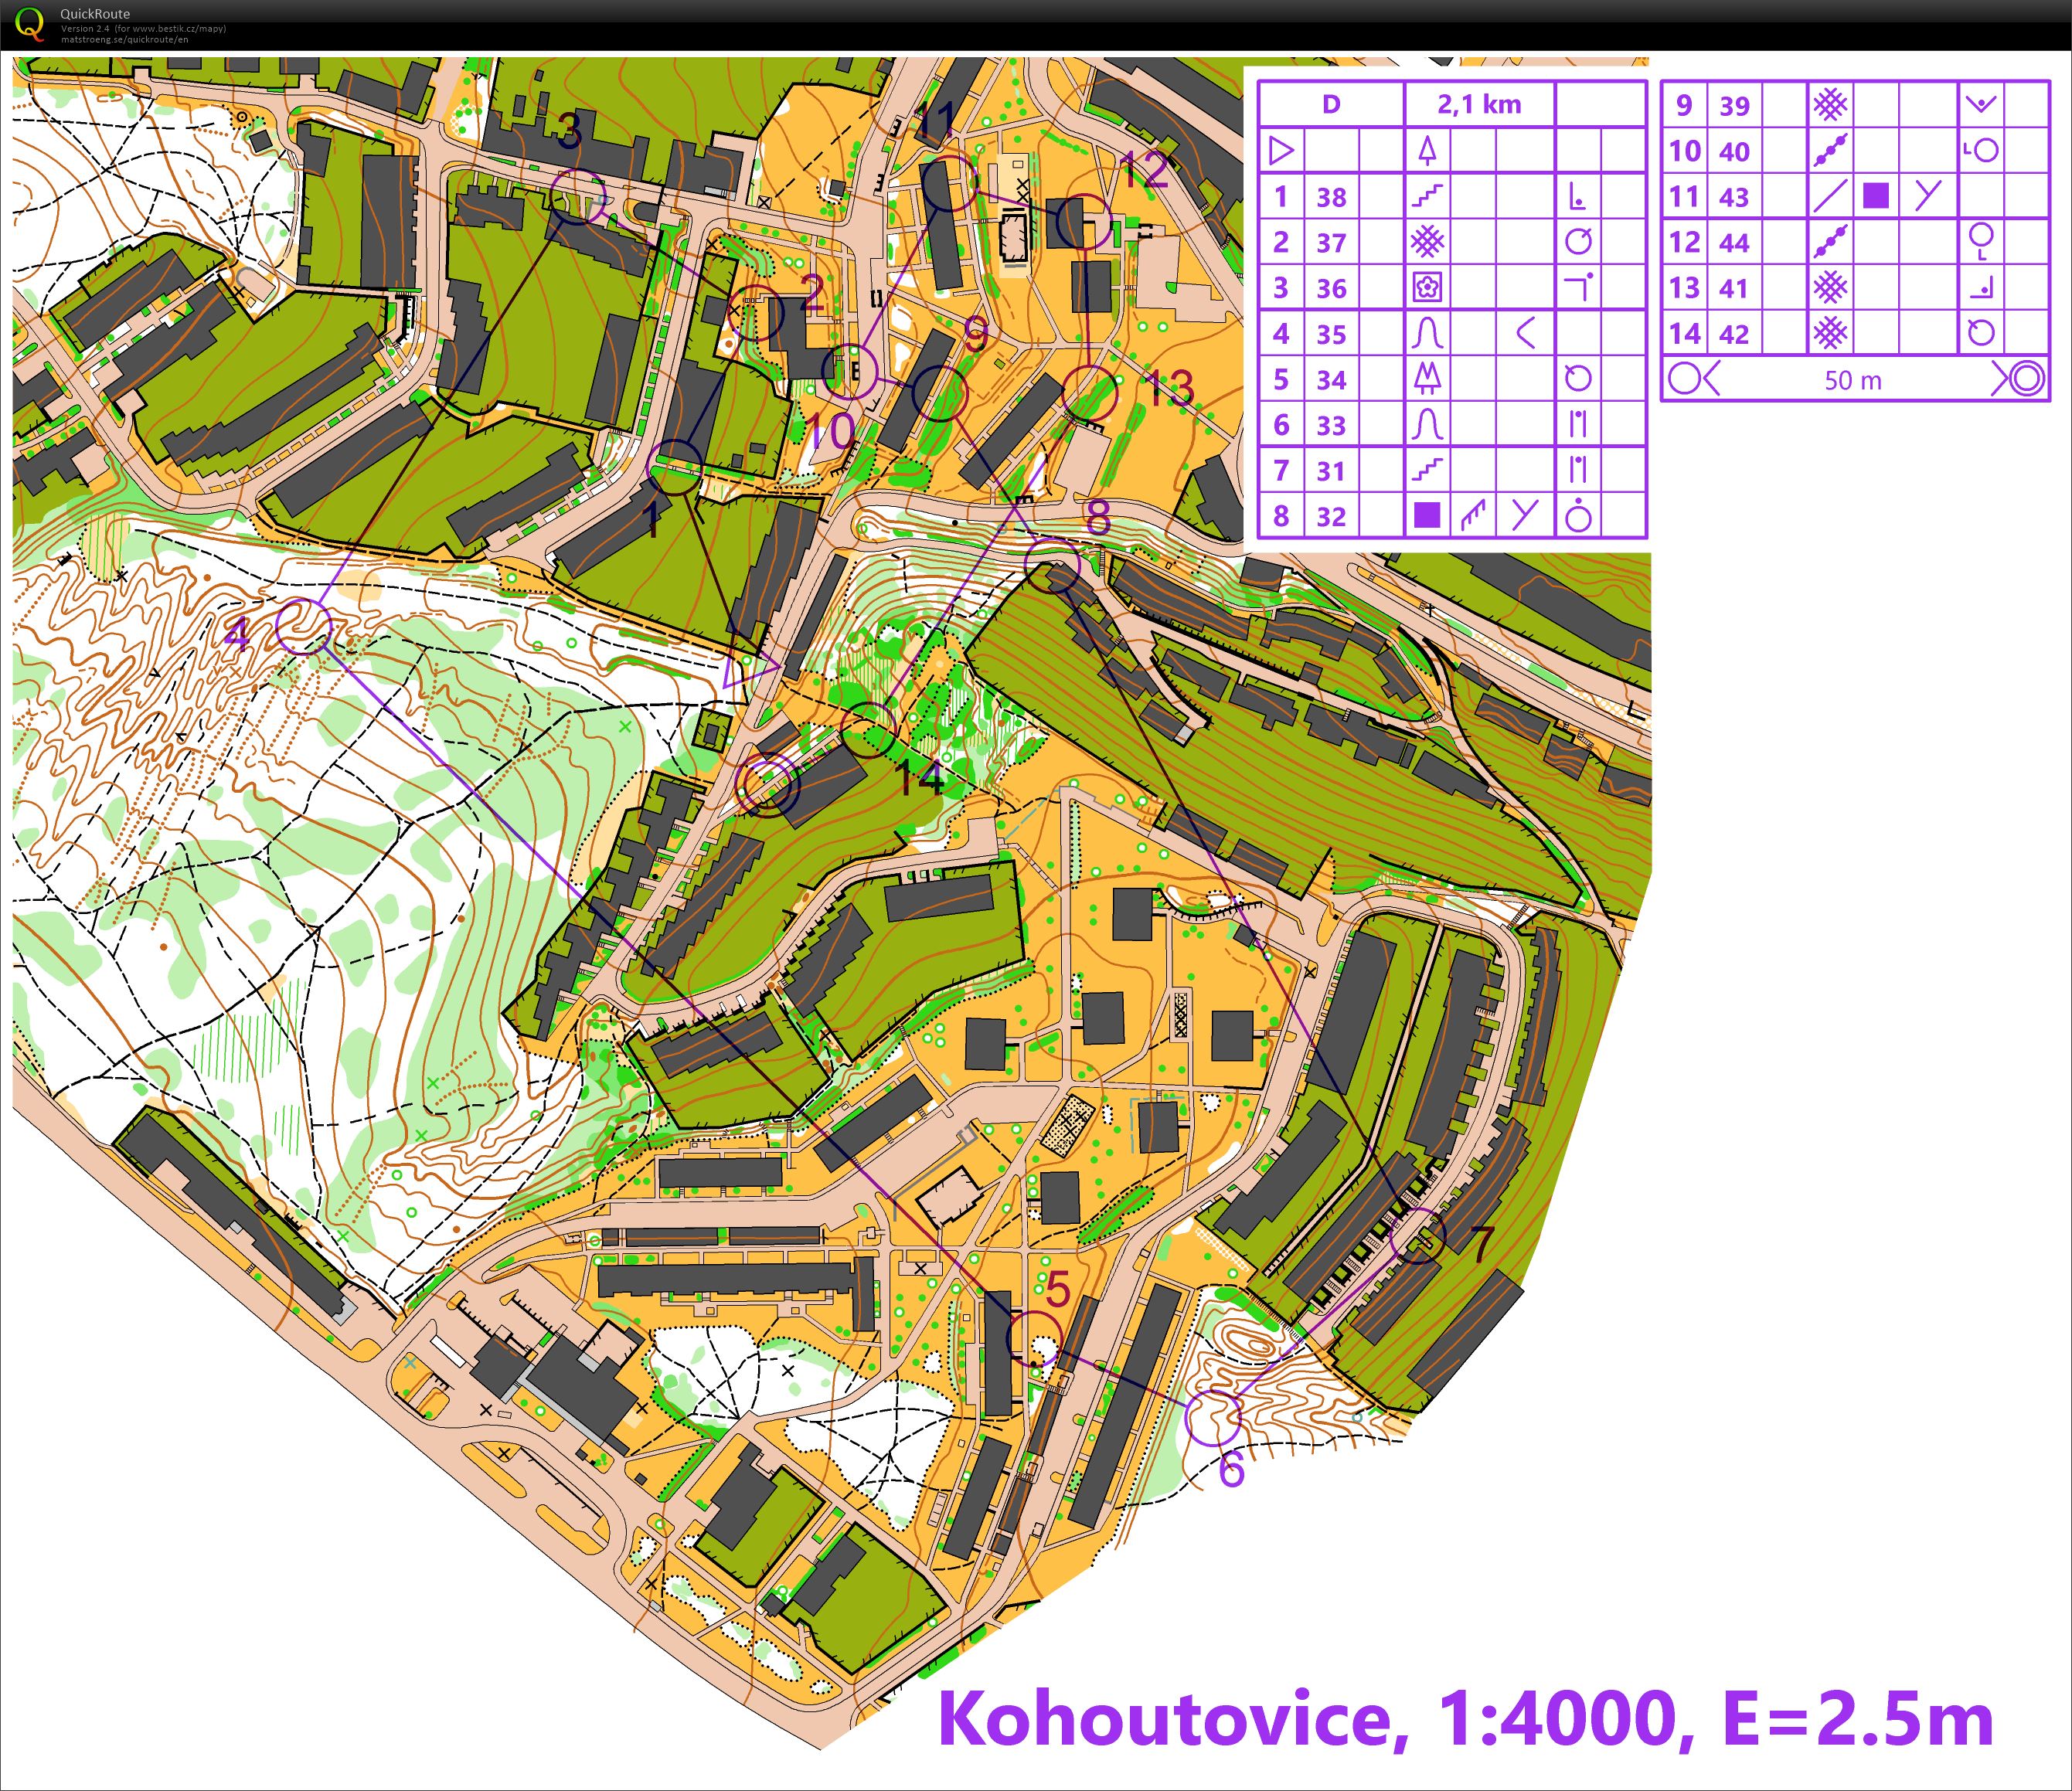 Kohoutovice sprint (16-05-2021)